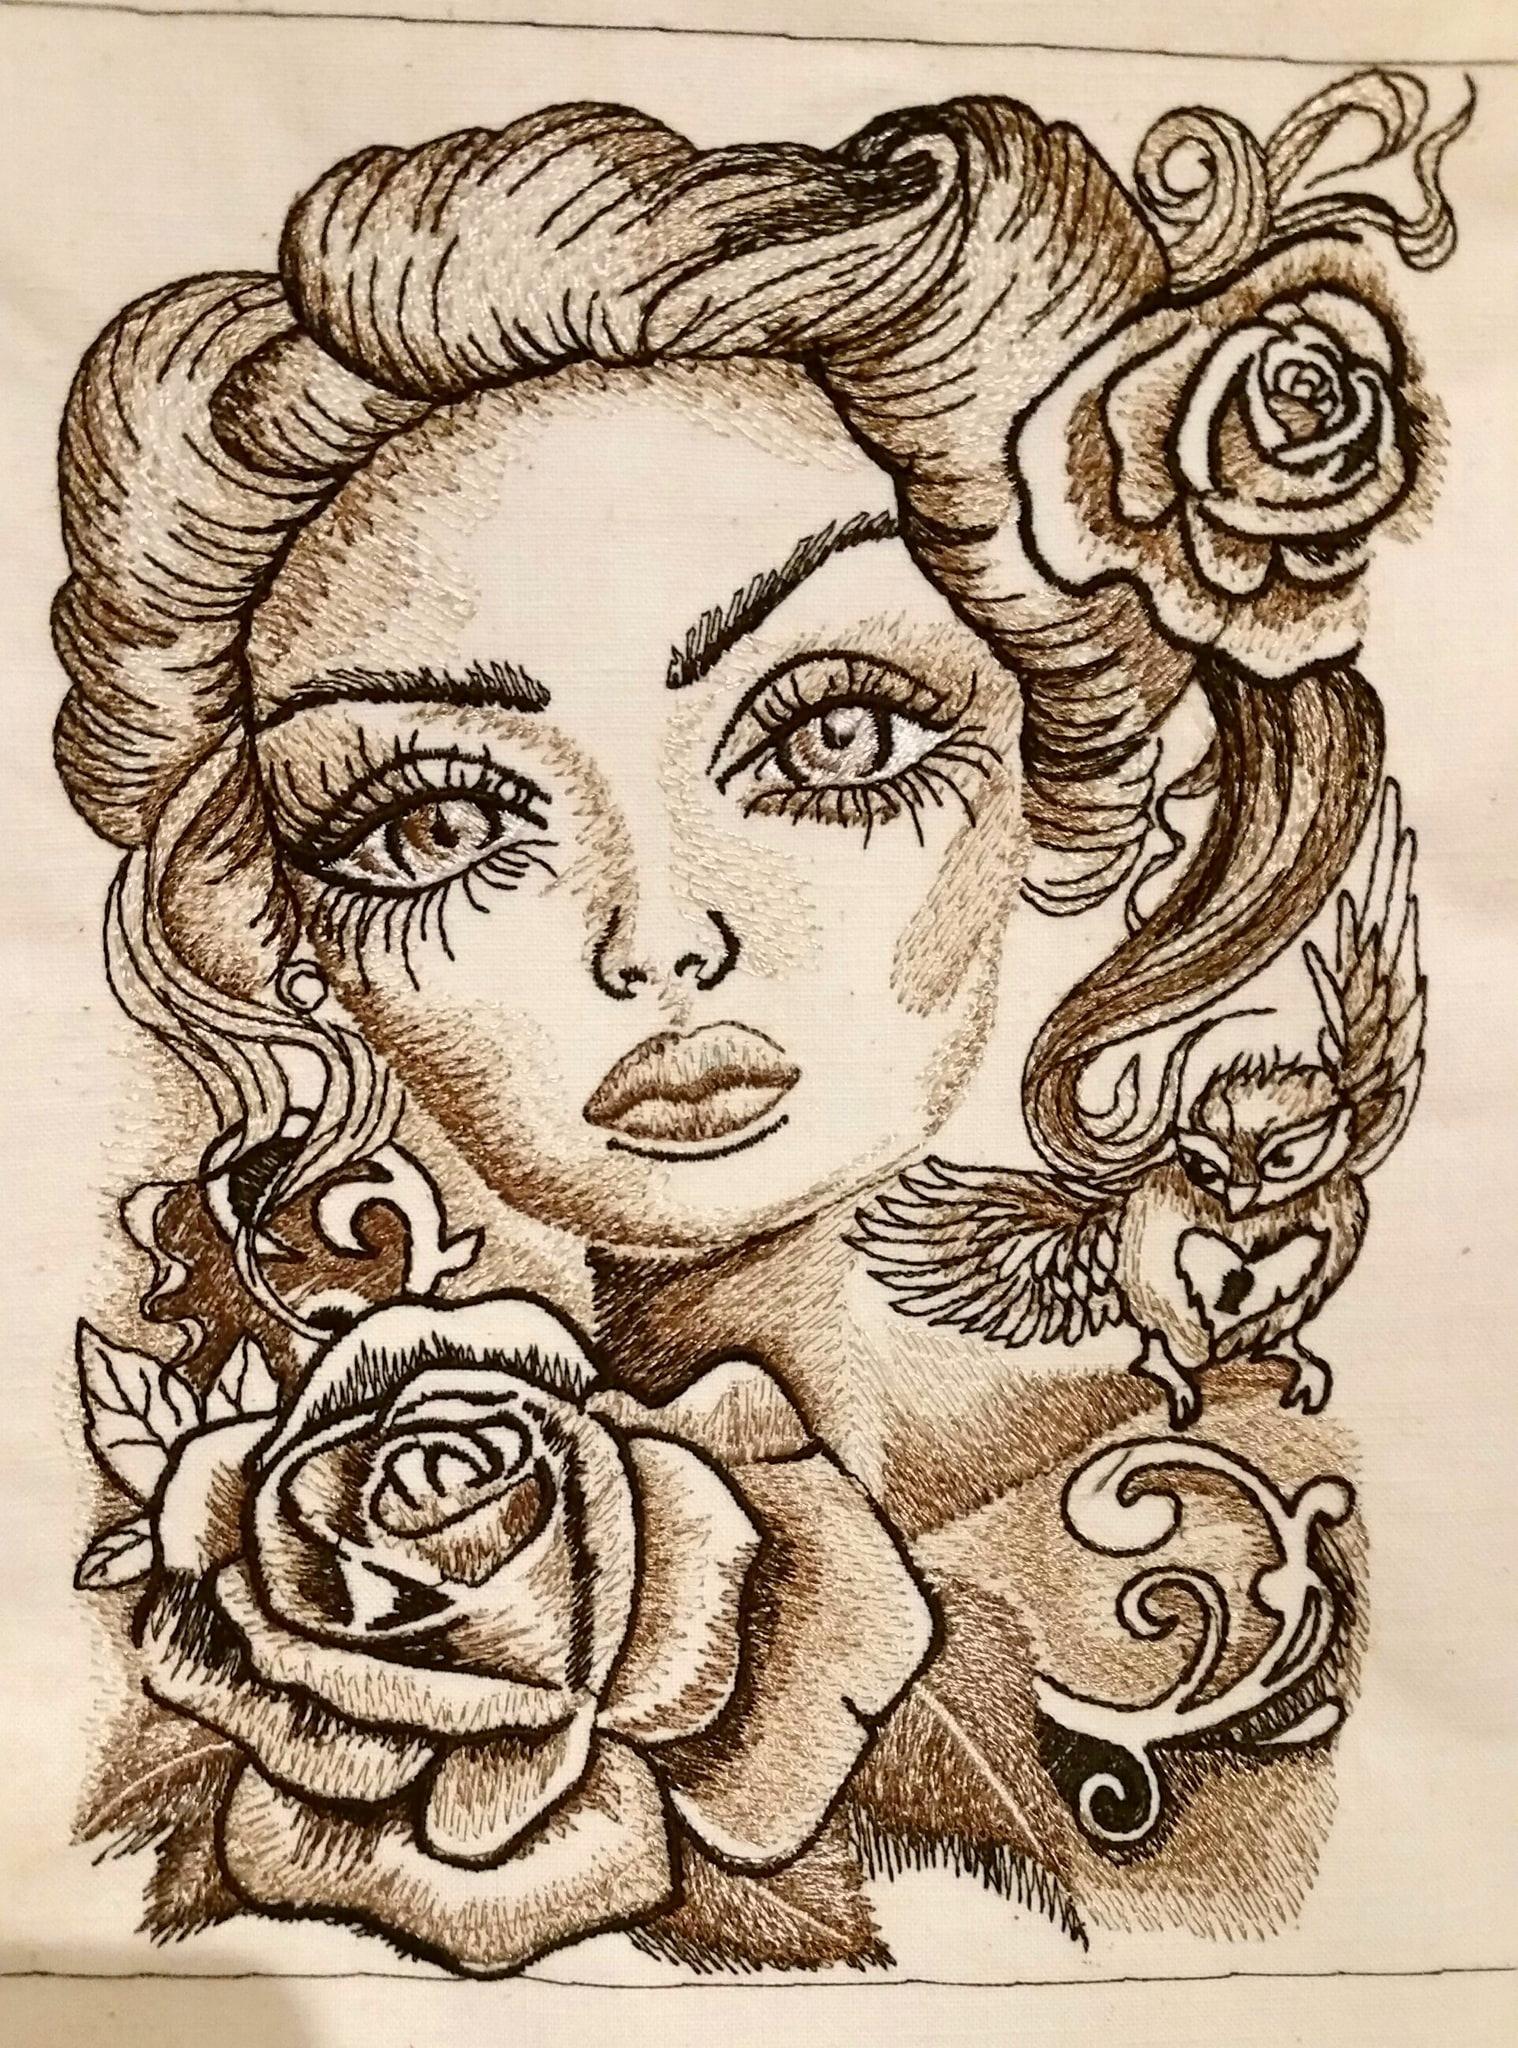 Beautiful woman embroidery design